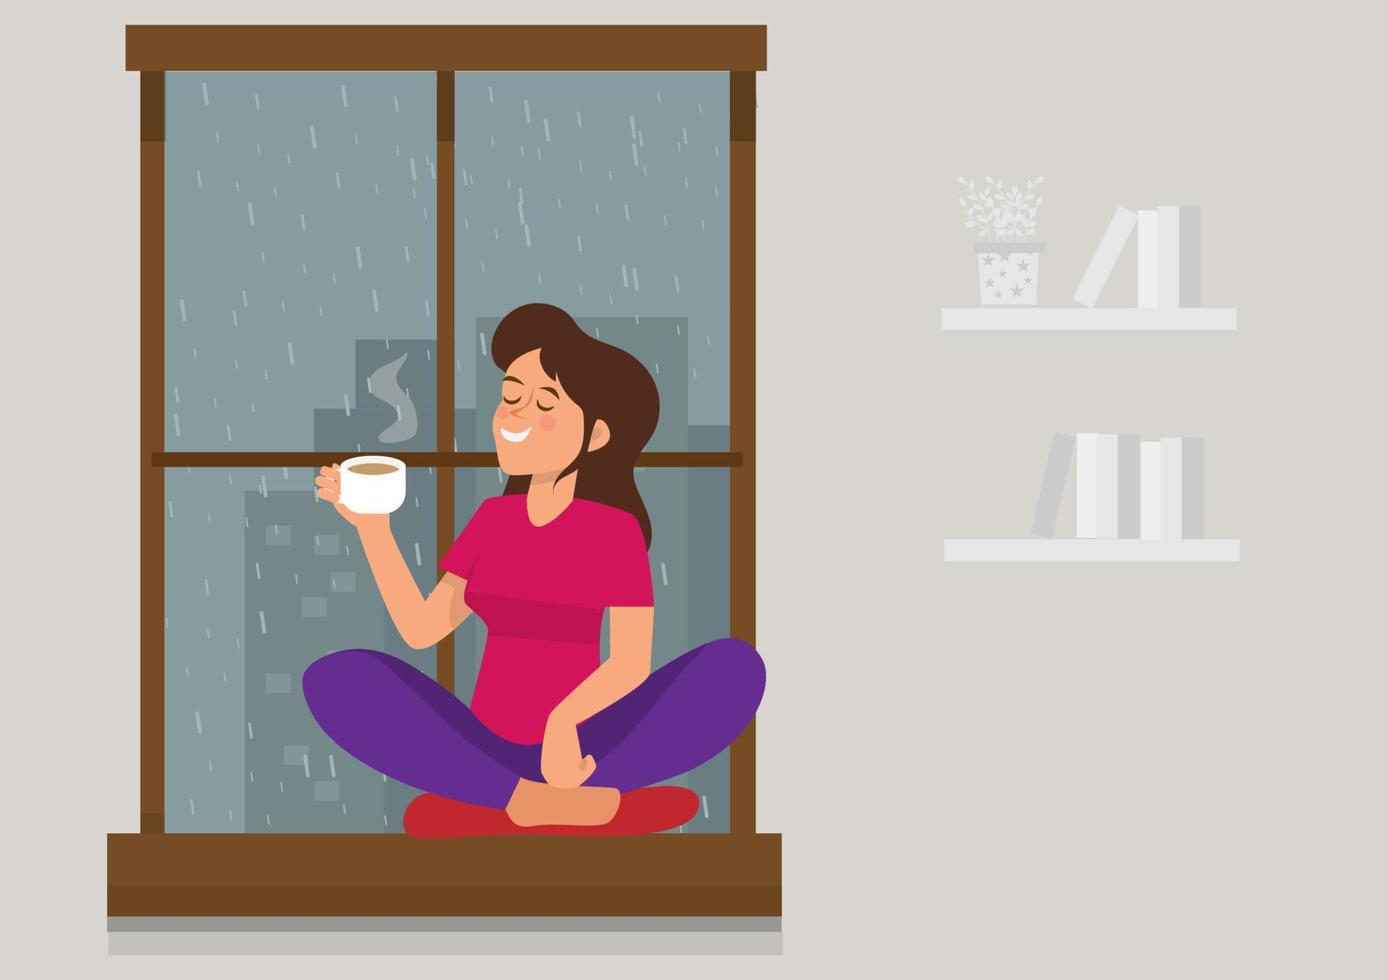 girl drinking Coffee near the window while it's raining outside. flat style cartoon illustration vector